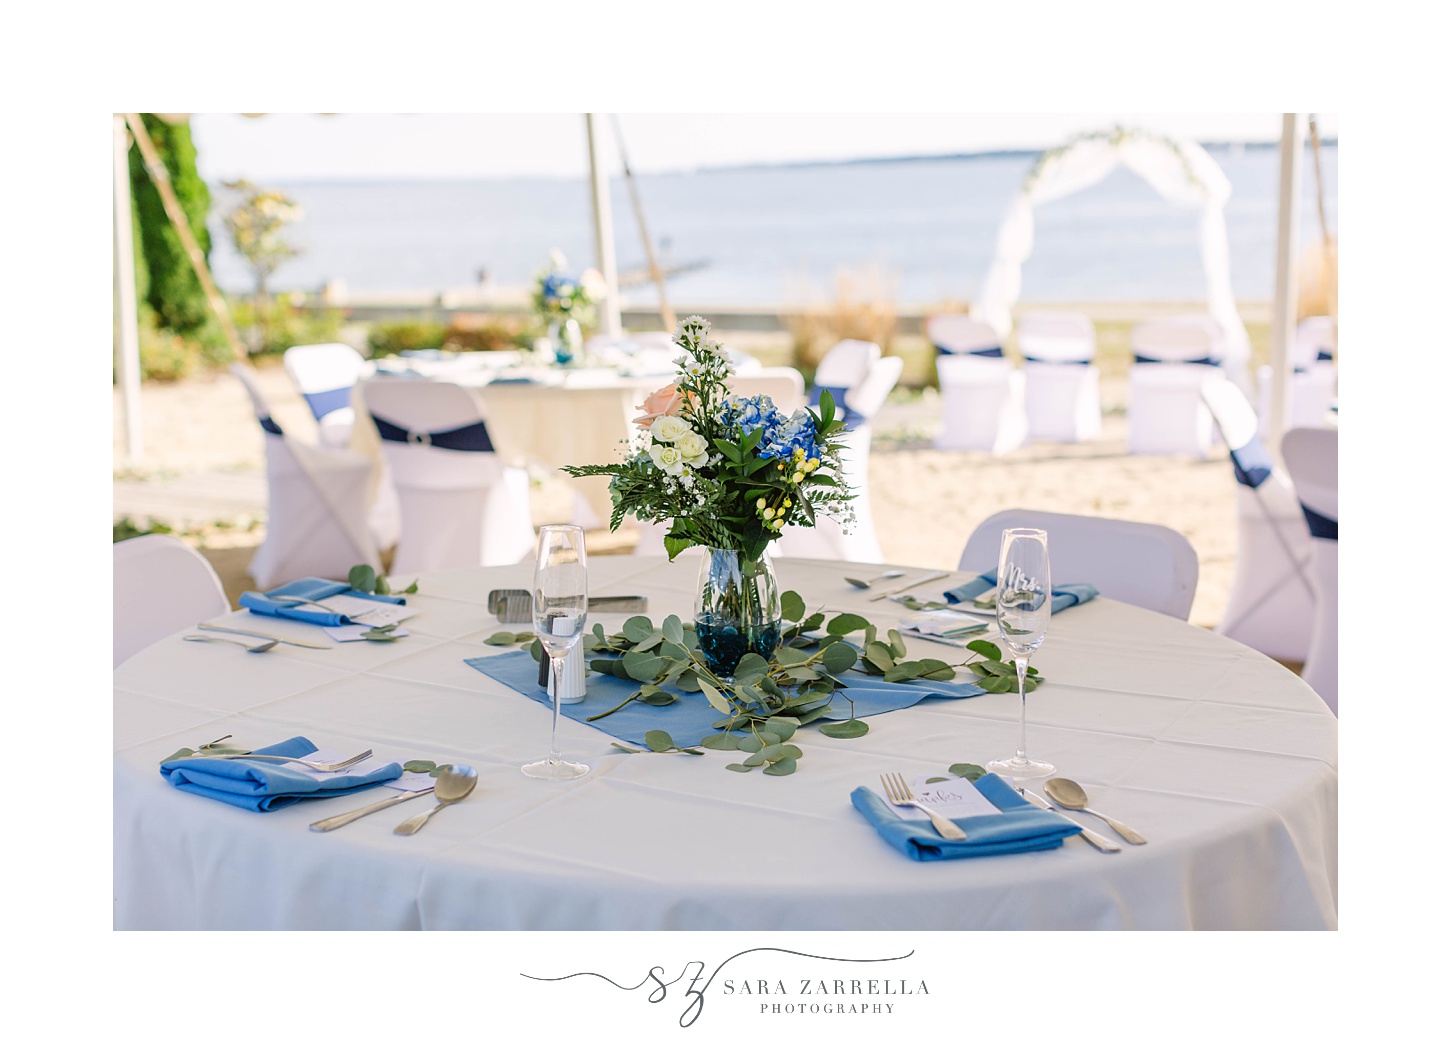 Rhode Island beach wedding reception with blue accents